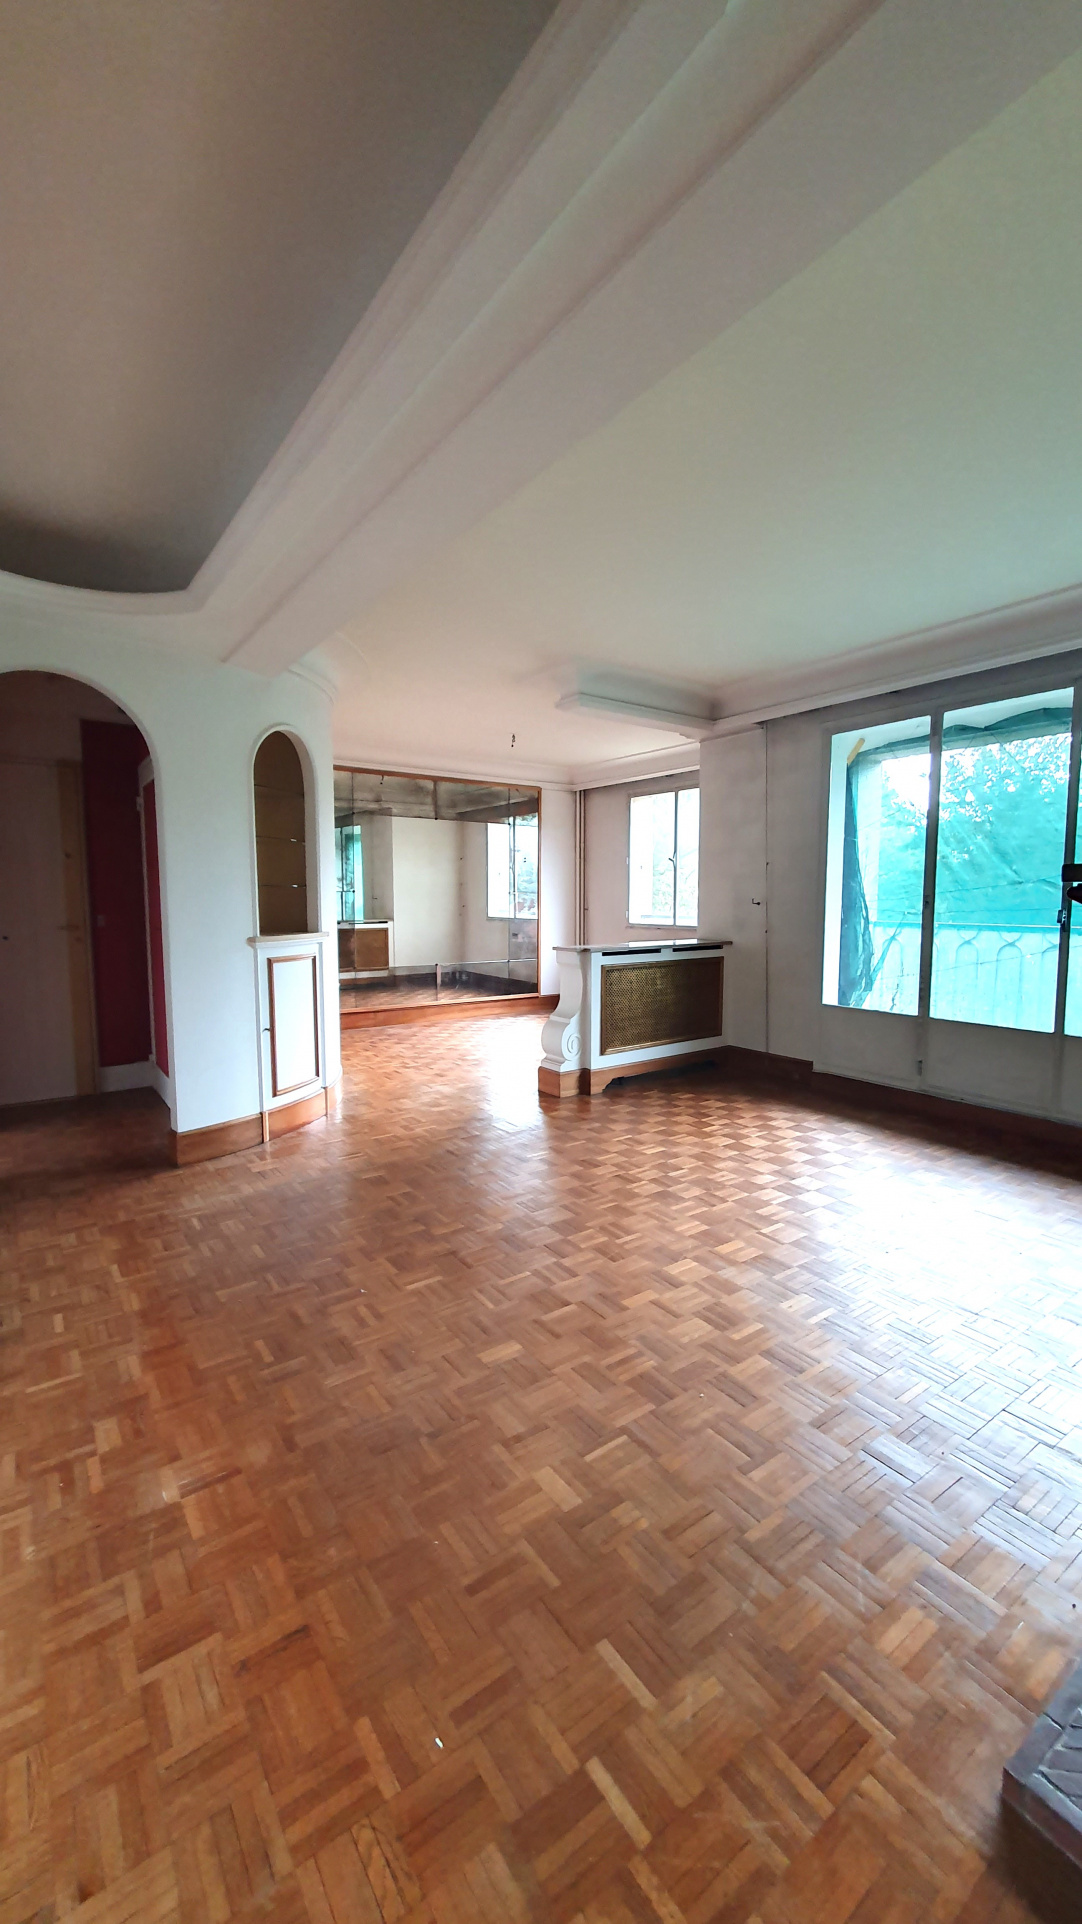 Appartement a louer ville-d'avray - 3 pièce(s) - 74 m2 - Surfyn